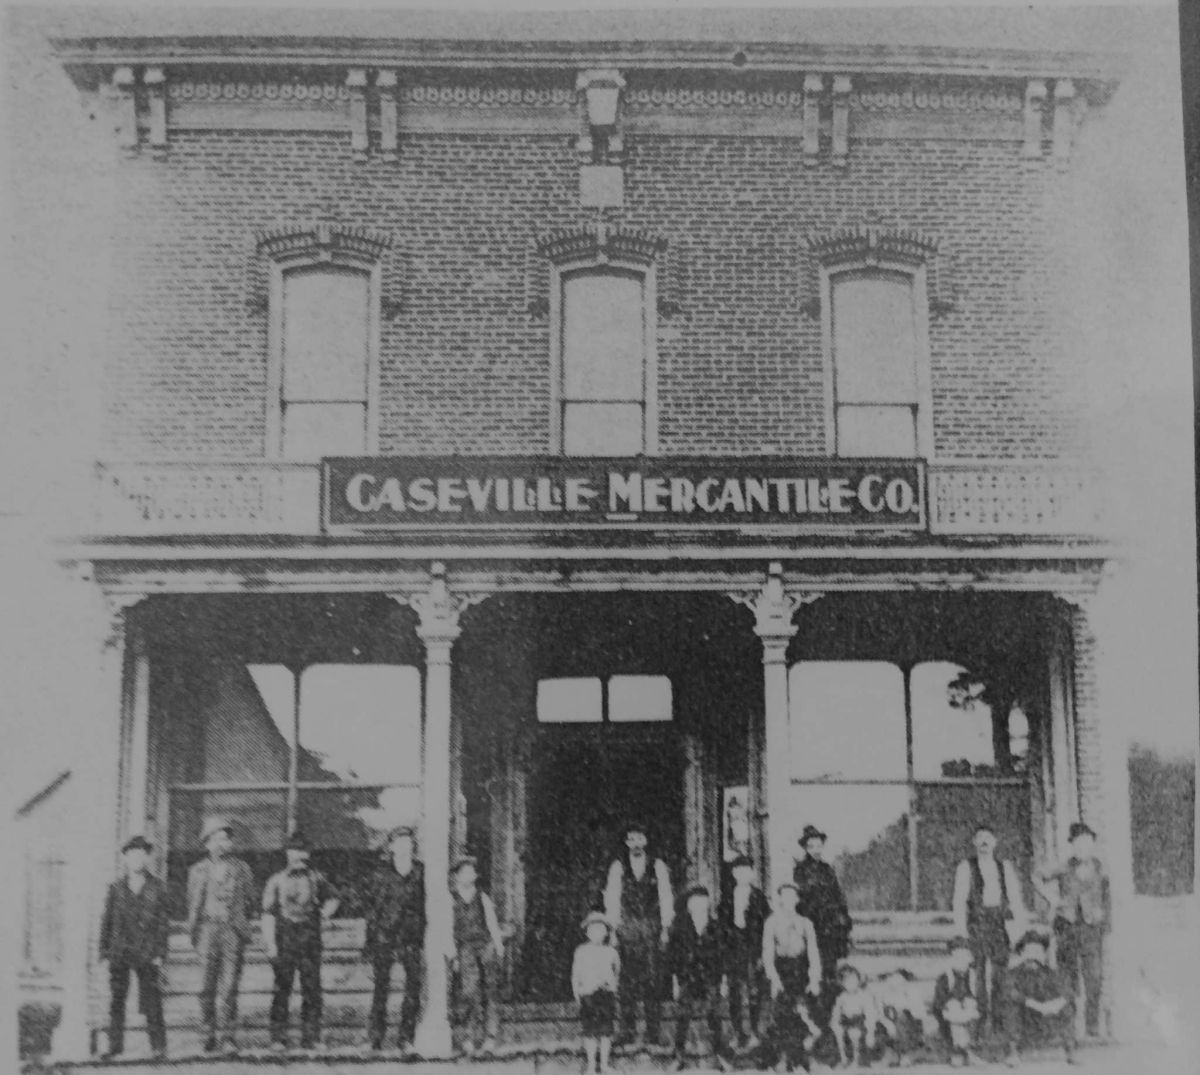 Caseville Mercantile